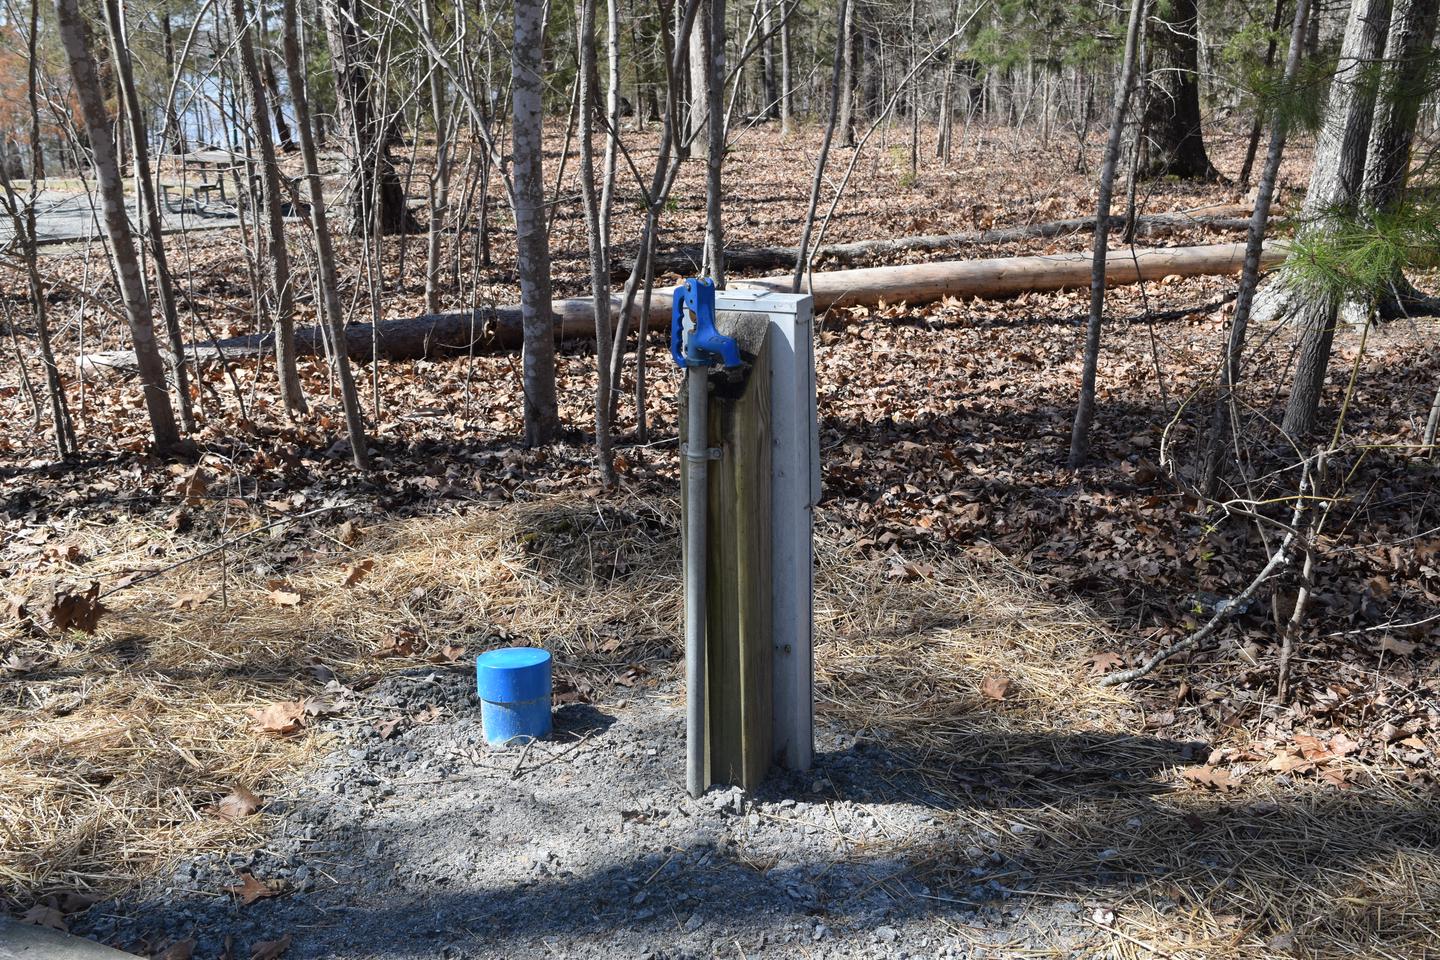 Longwood Site #2 utilitiesLongwood site #2 water spigot and electricity pedestal. 